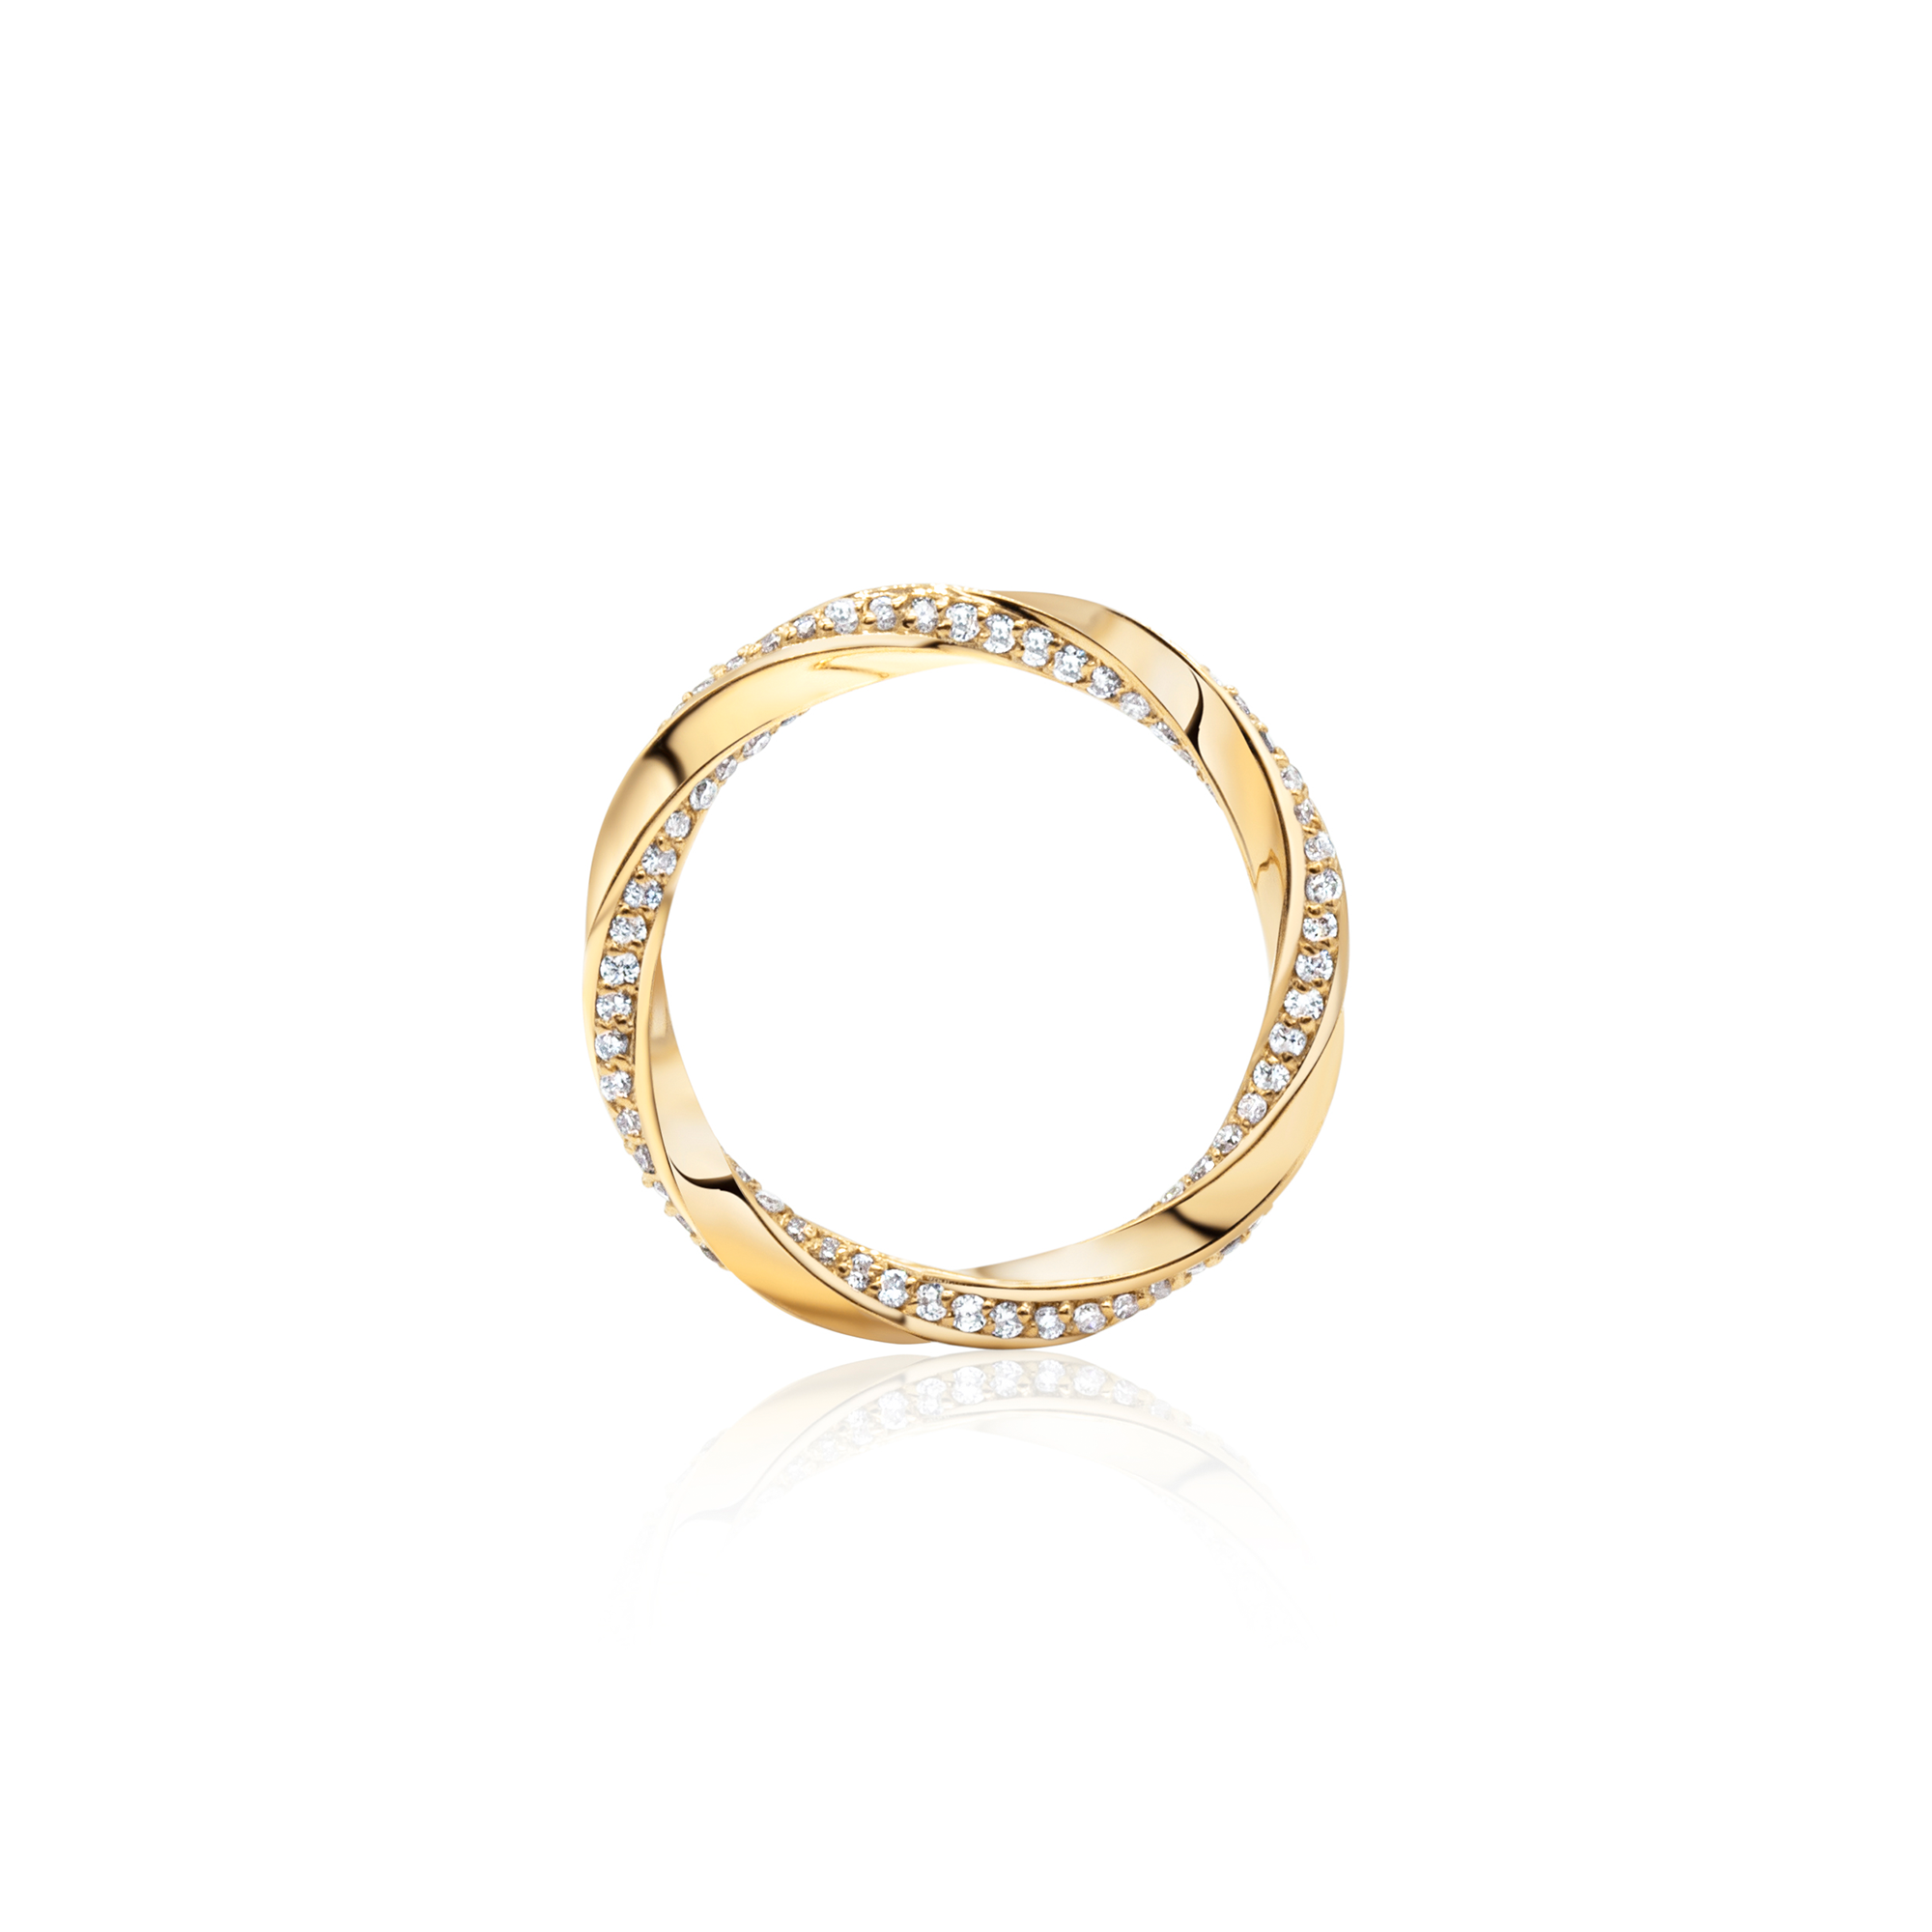 14K yellow gold diamond rings eternity ring wedding jewelry